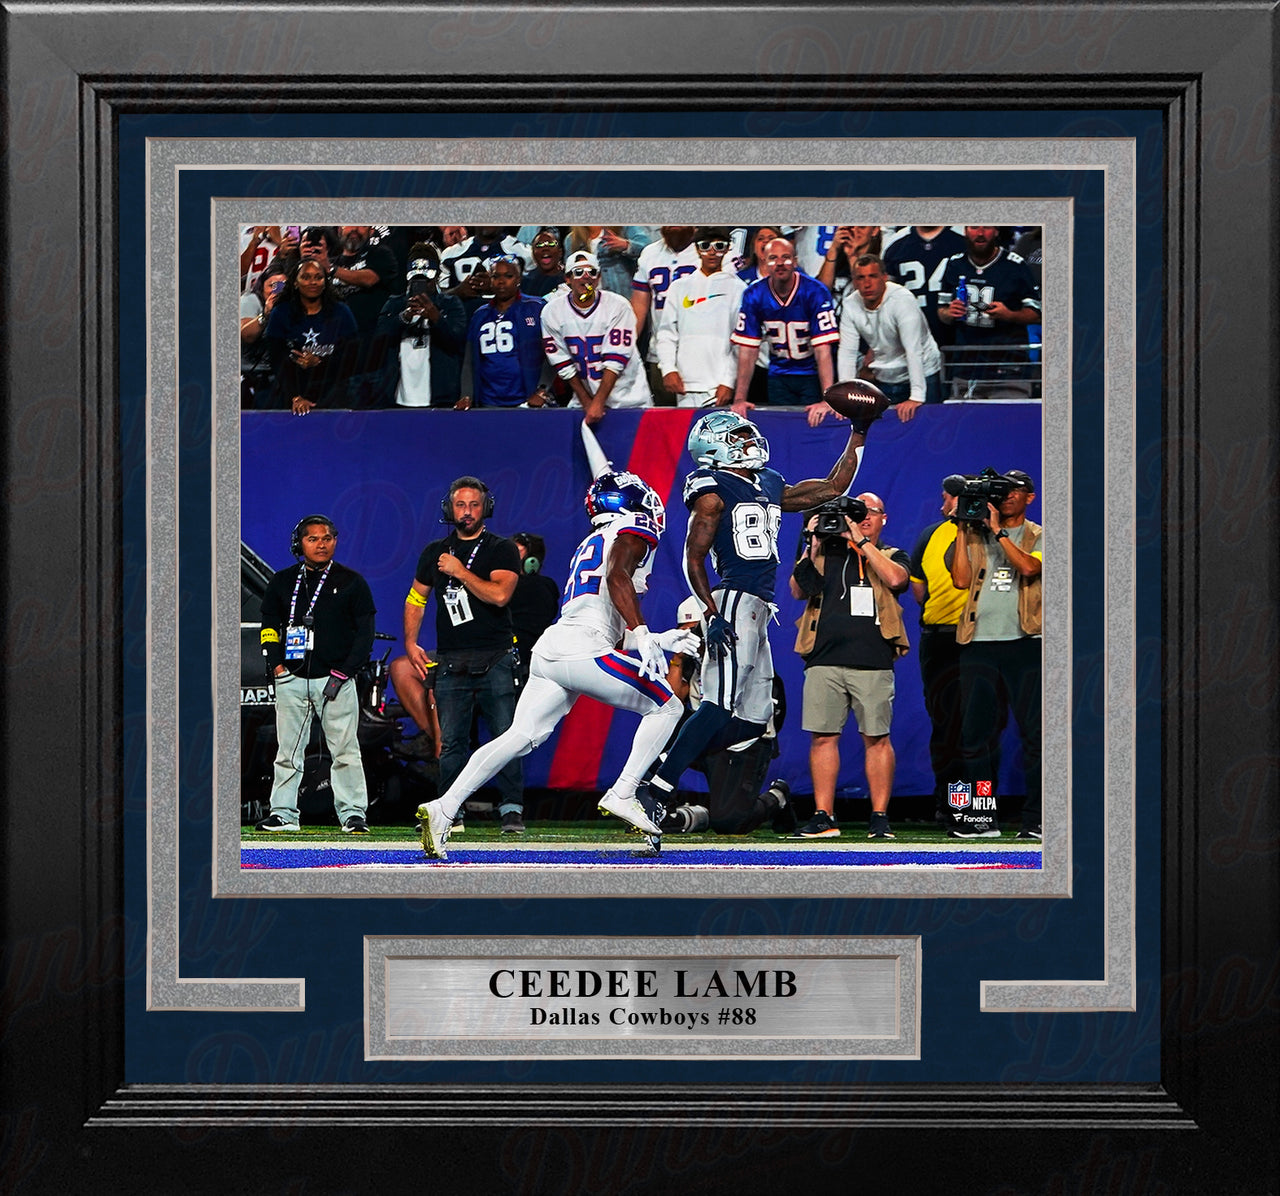 CeeDee Lamb One-Handed Touchdown Catch Dallas Cowboys 8" x 10" Framed Football Photo - Dynasty Sports & Framing 